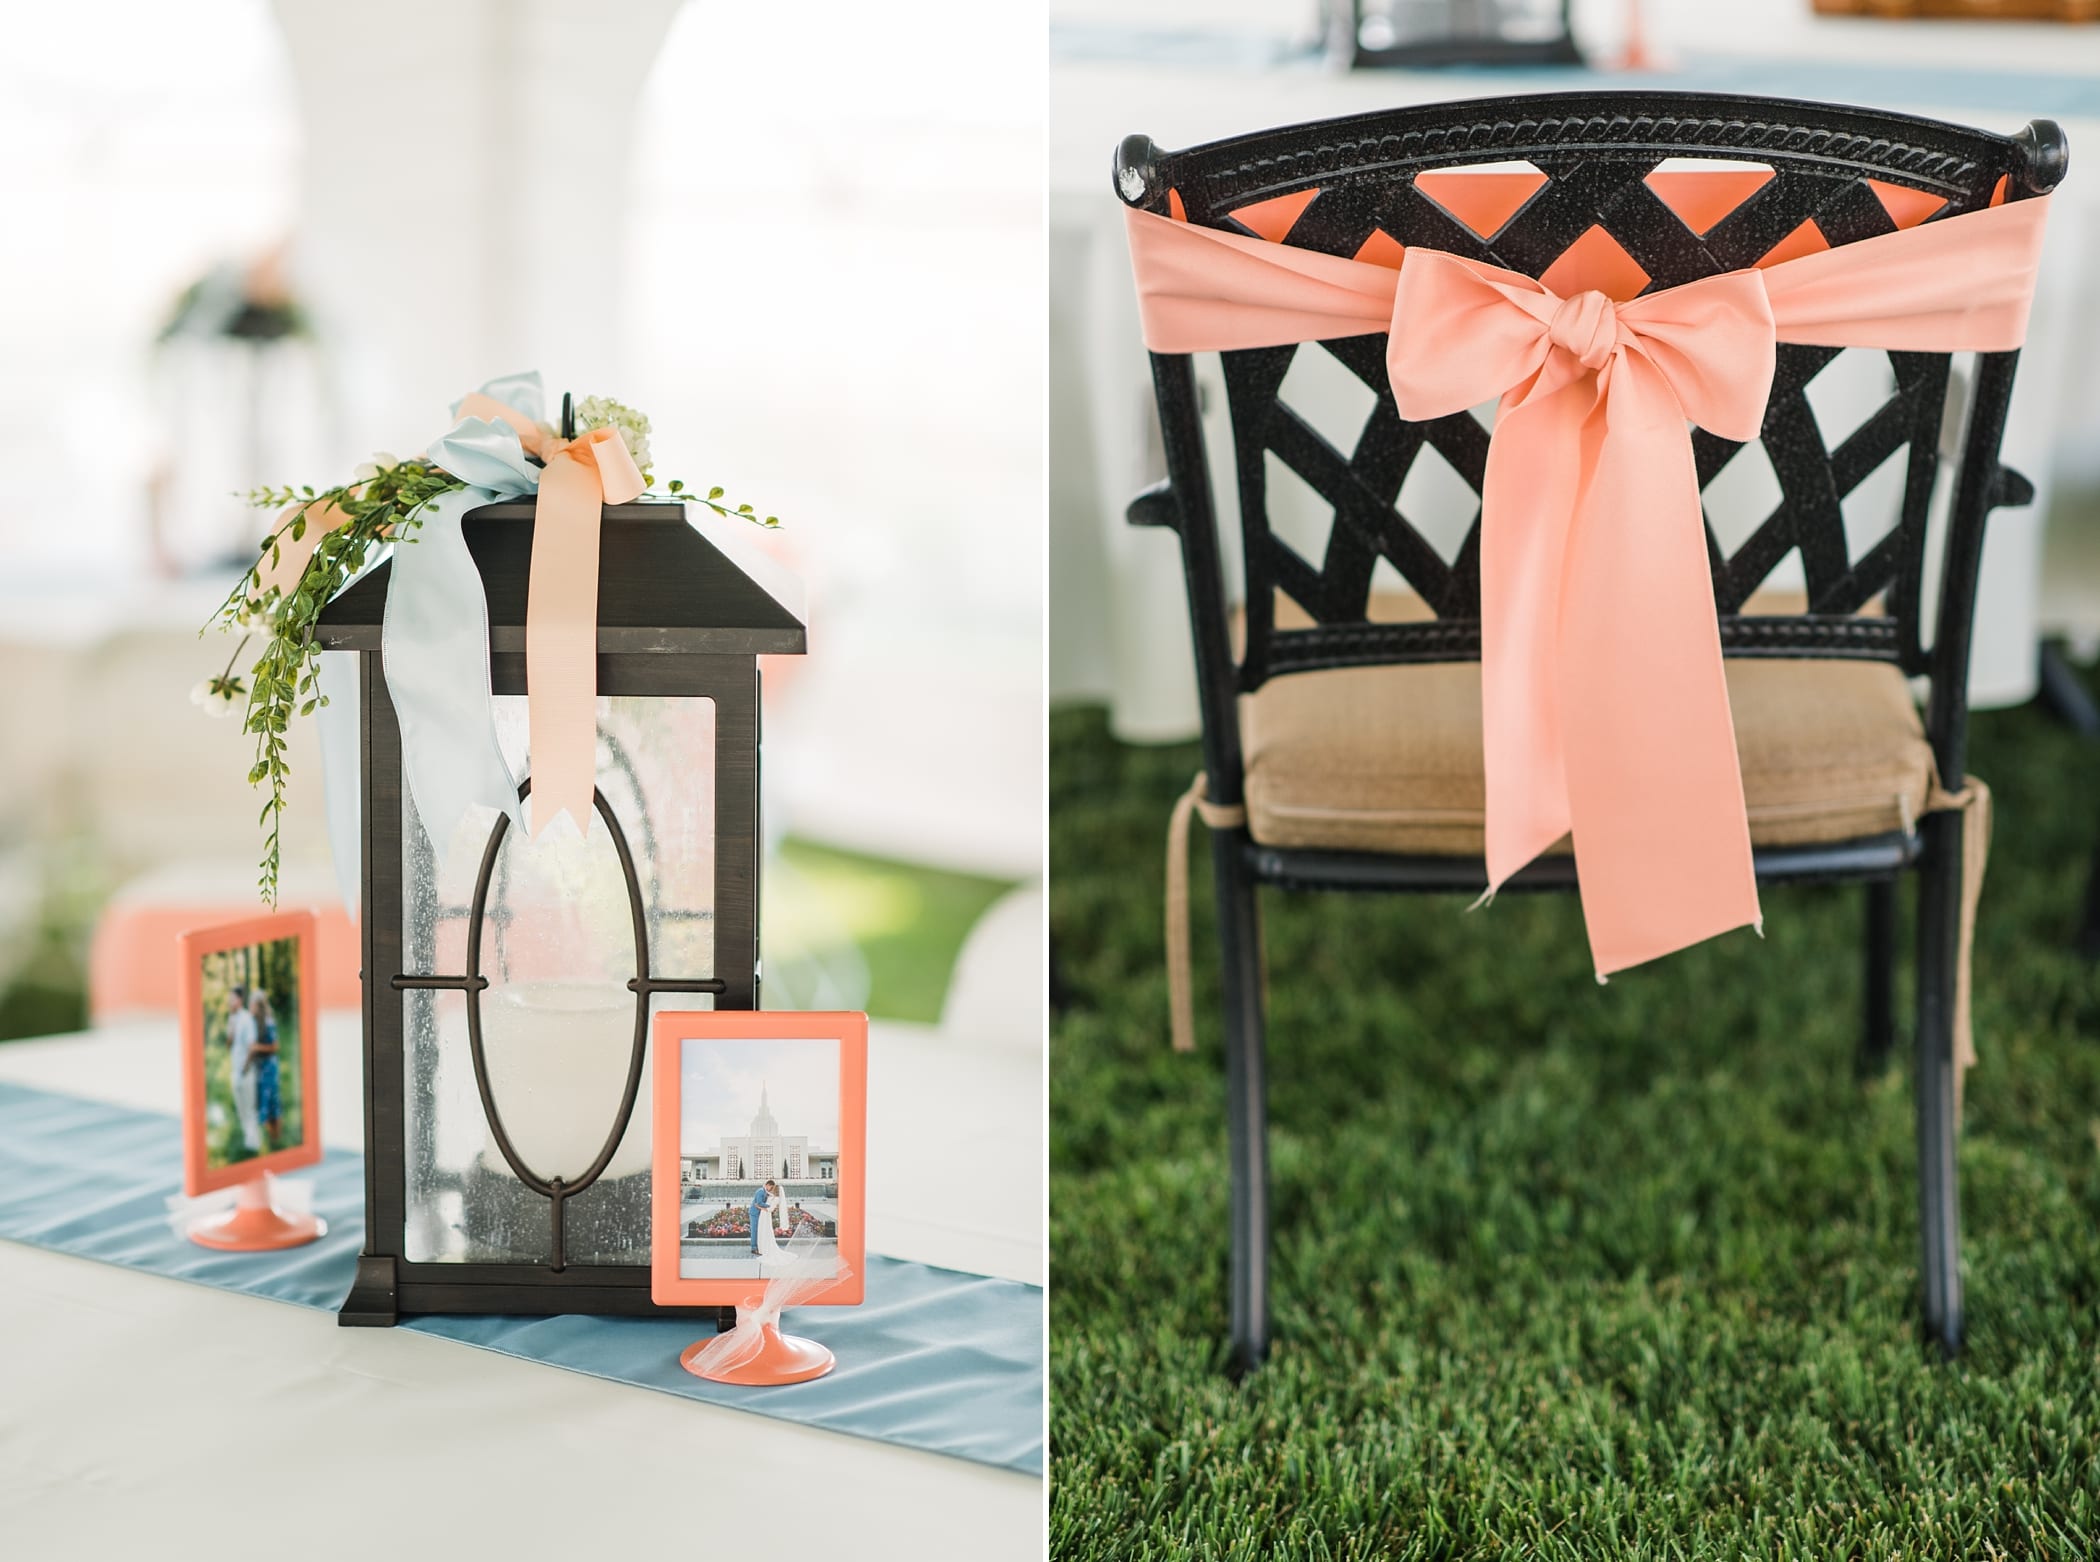 Idaho Summer wedding and outdoor reception | Idaho Falls LDS Temple | Dusty Blue and peach wedding | Michelle & Logan Photo & Films 